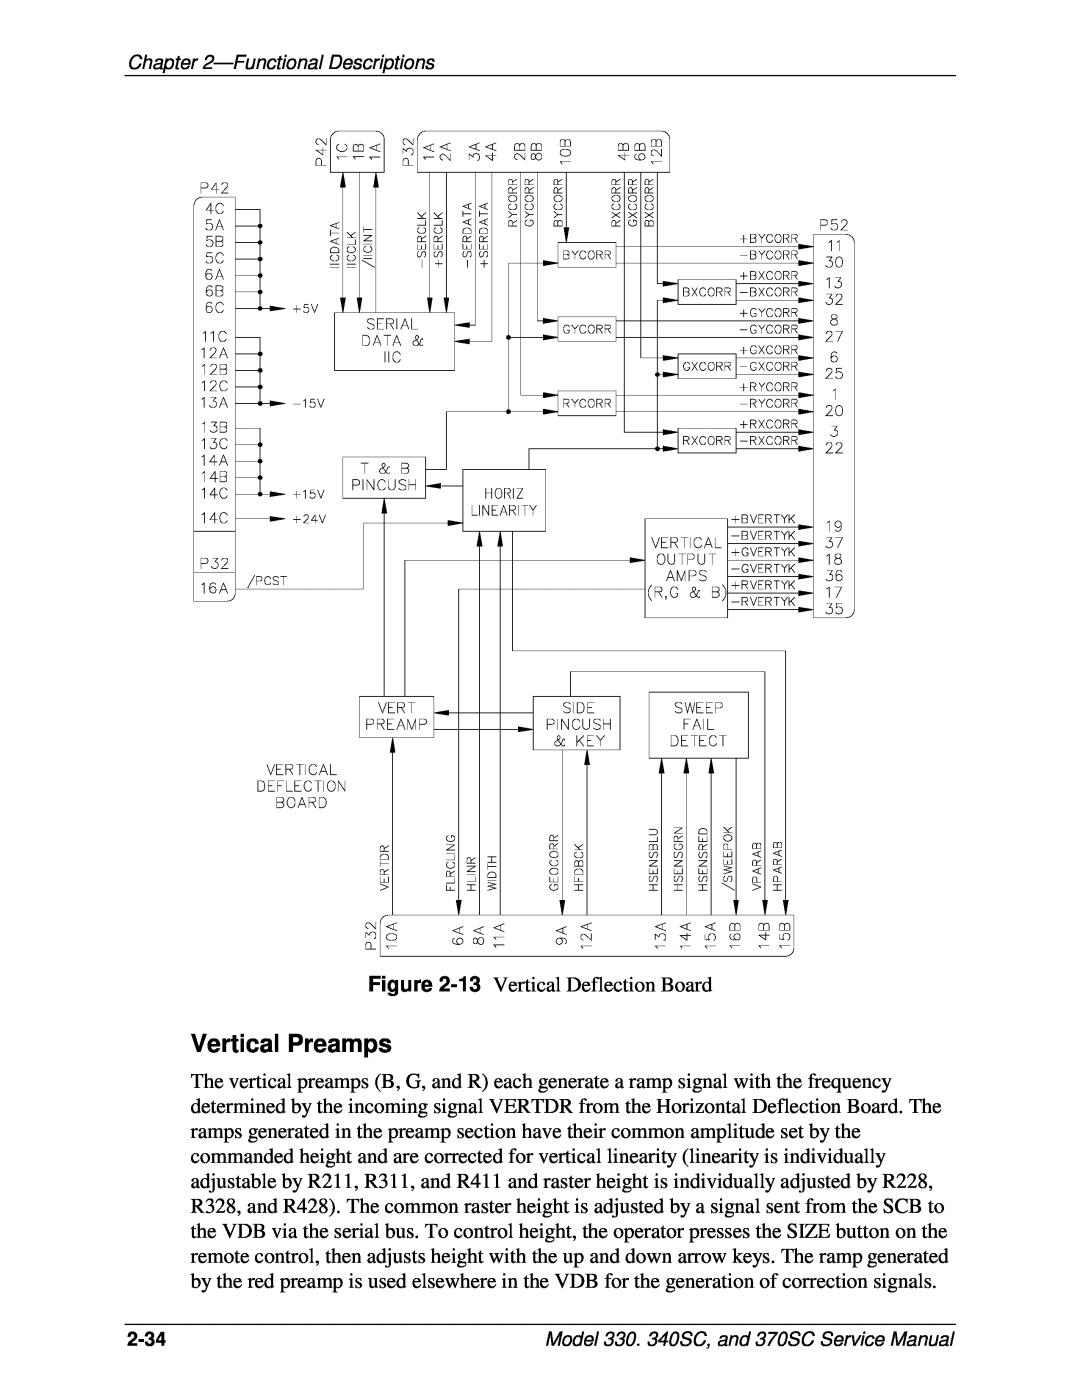 JVC 370 SC, 330, 340 SC service manual Vertical Preamps 